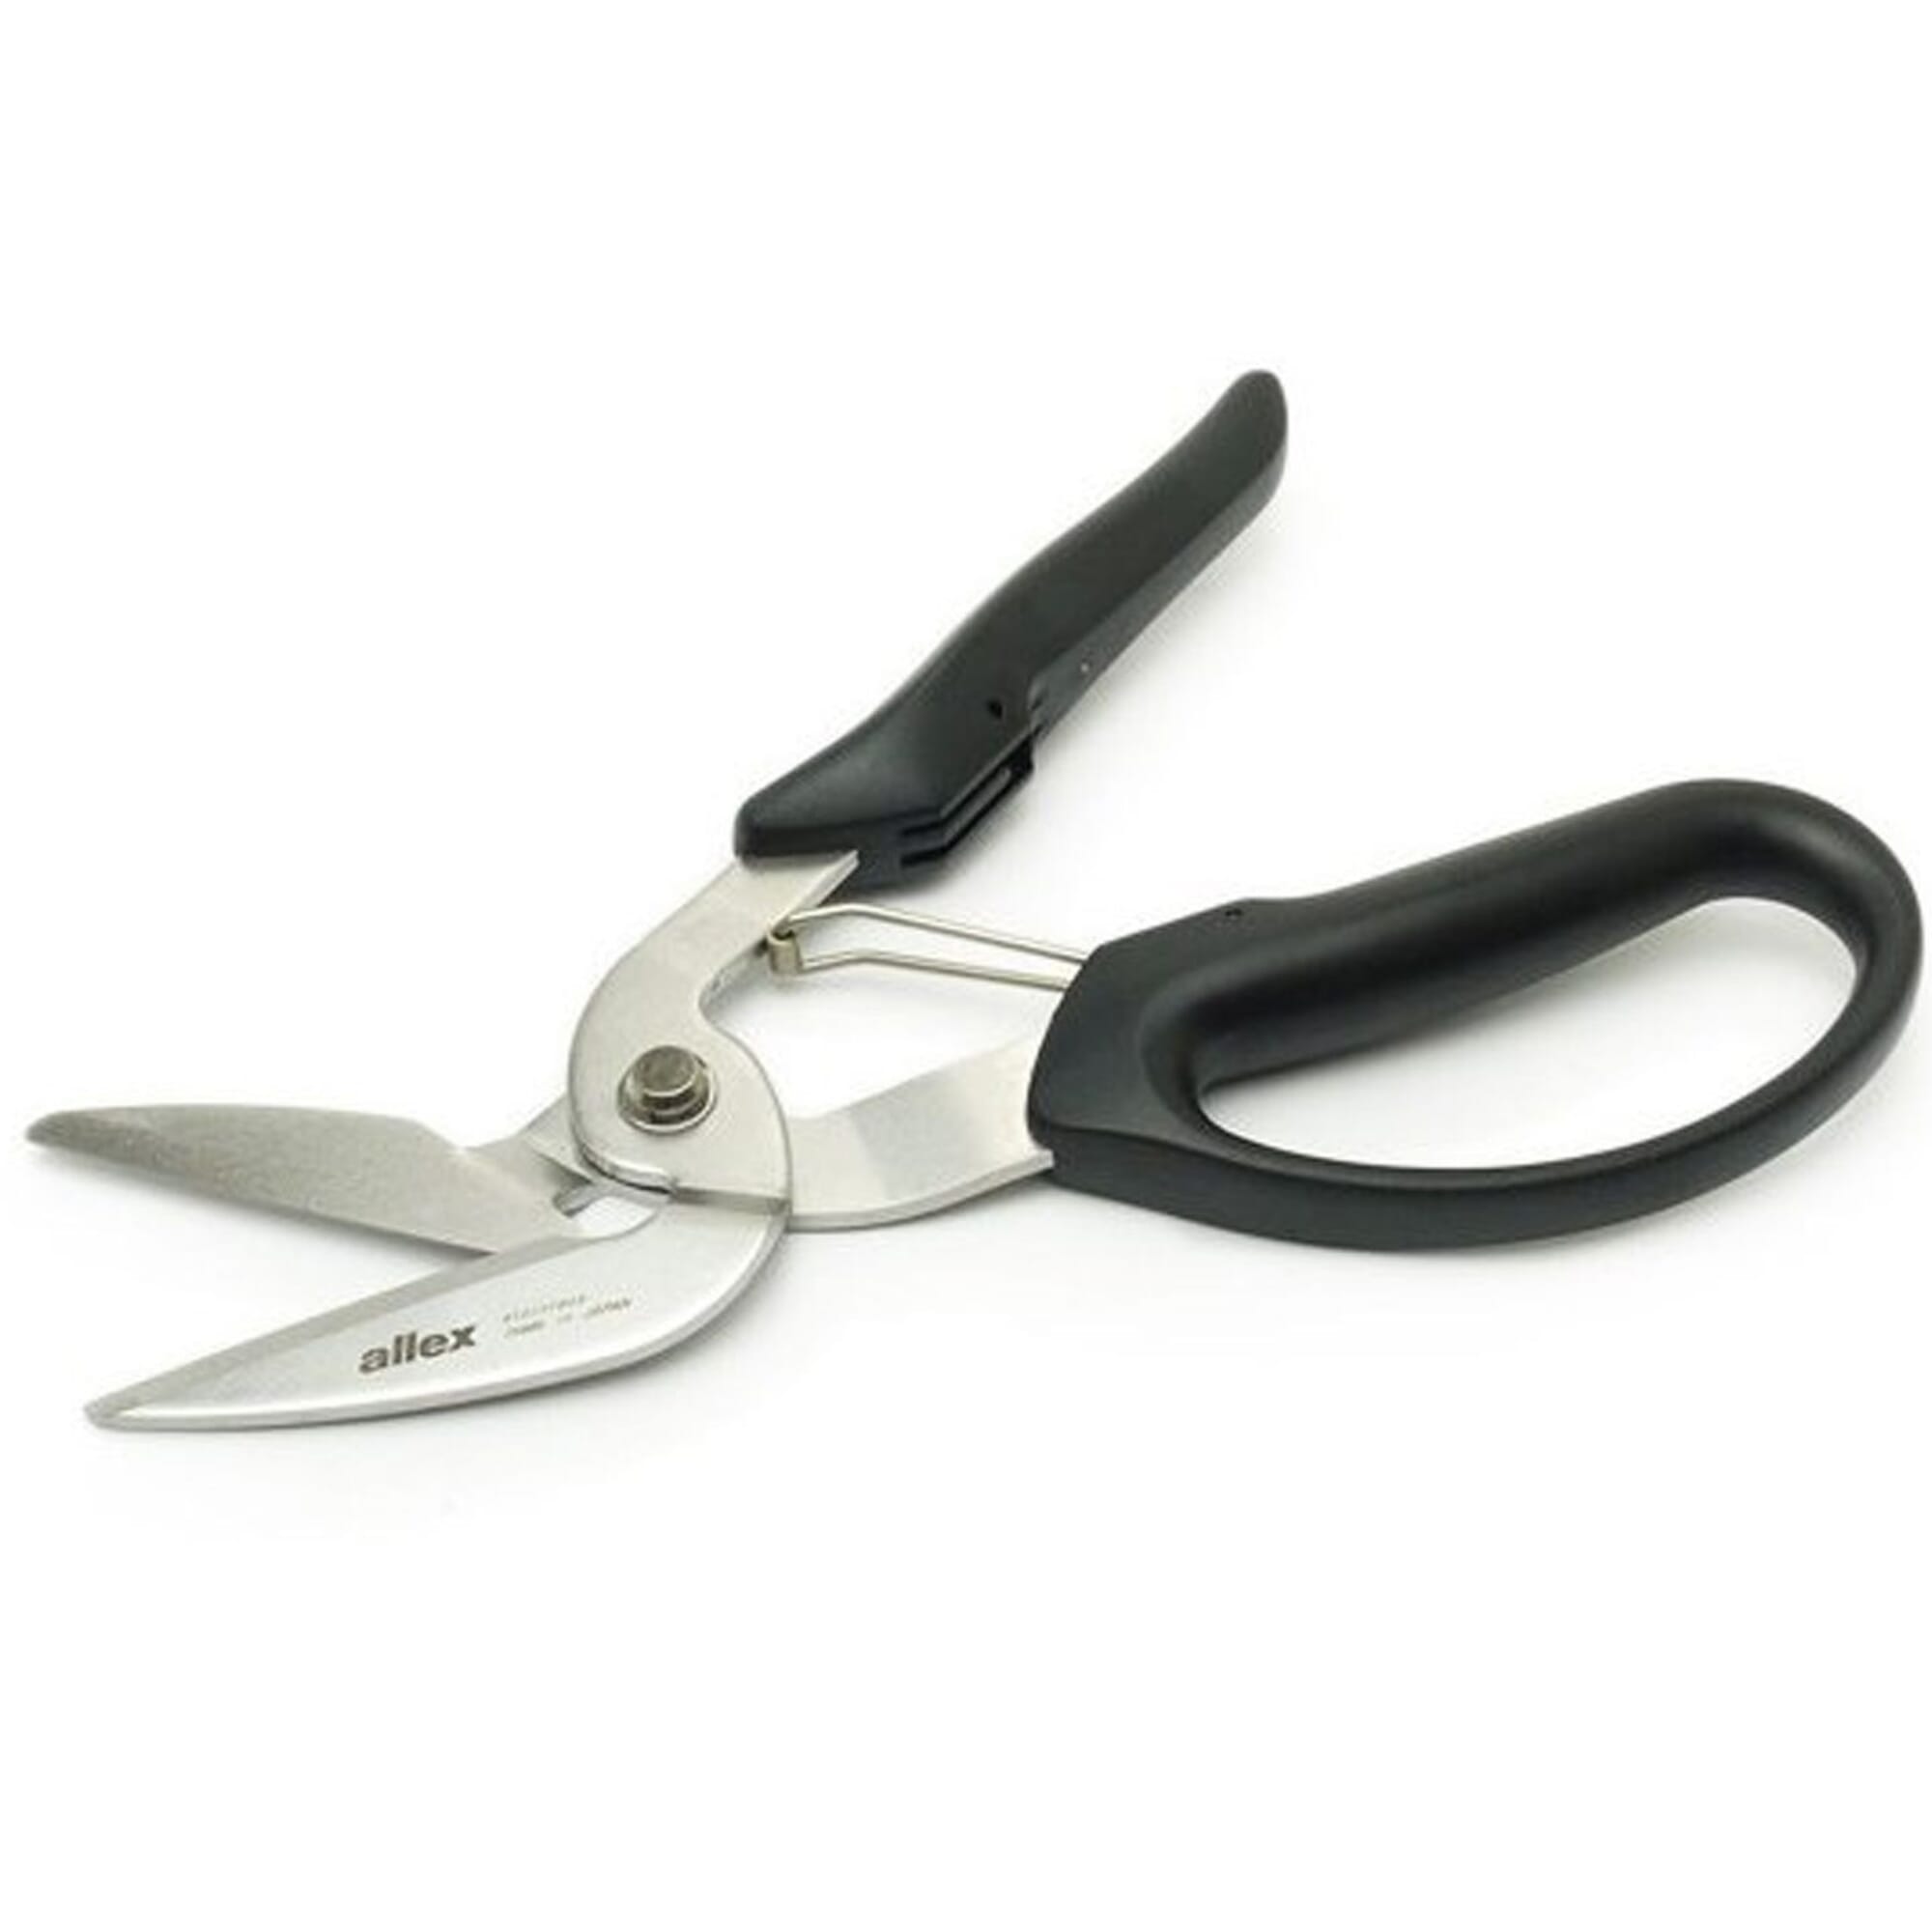 Allex Super Hard Scissors SH-1 Stainless Steel General Purpose Utility  Shears 55mm, to Cut Cardboard, Leather, Resin Sheet, & Carton